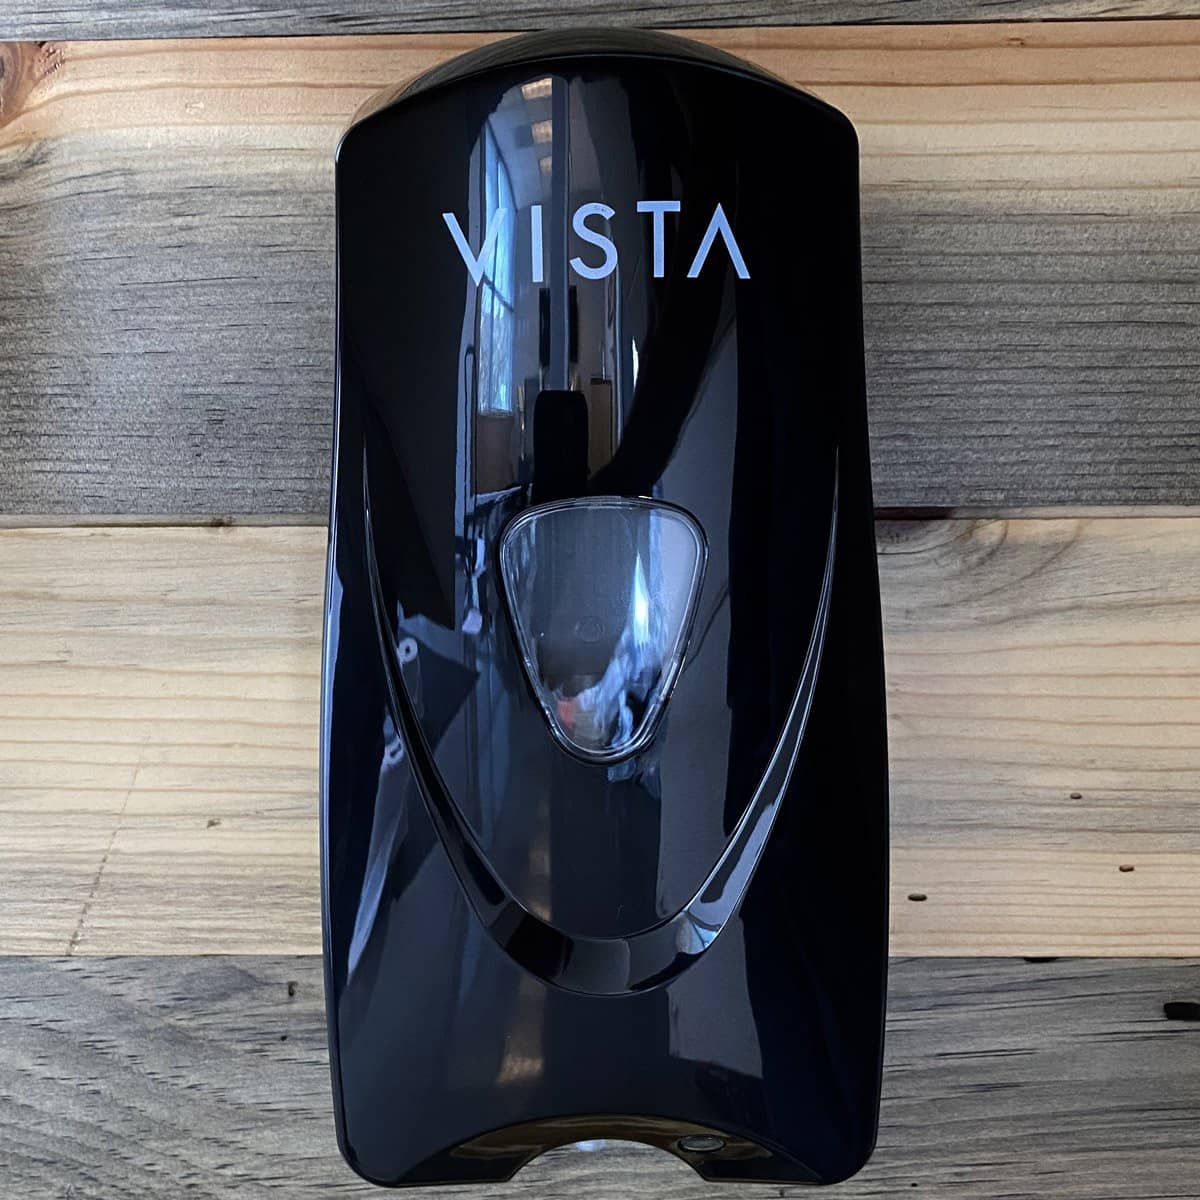 VISTA Electronic Soap Dispenser, Black - SD1003 - TotalRestroom.com